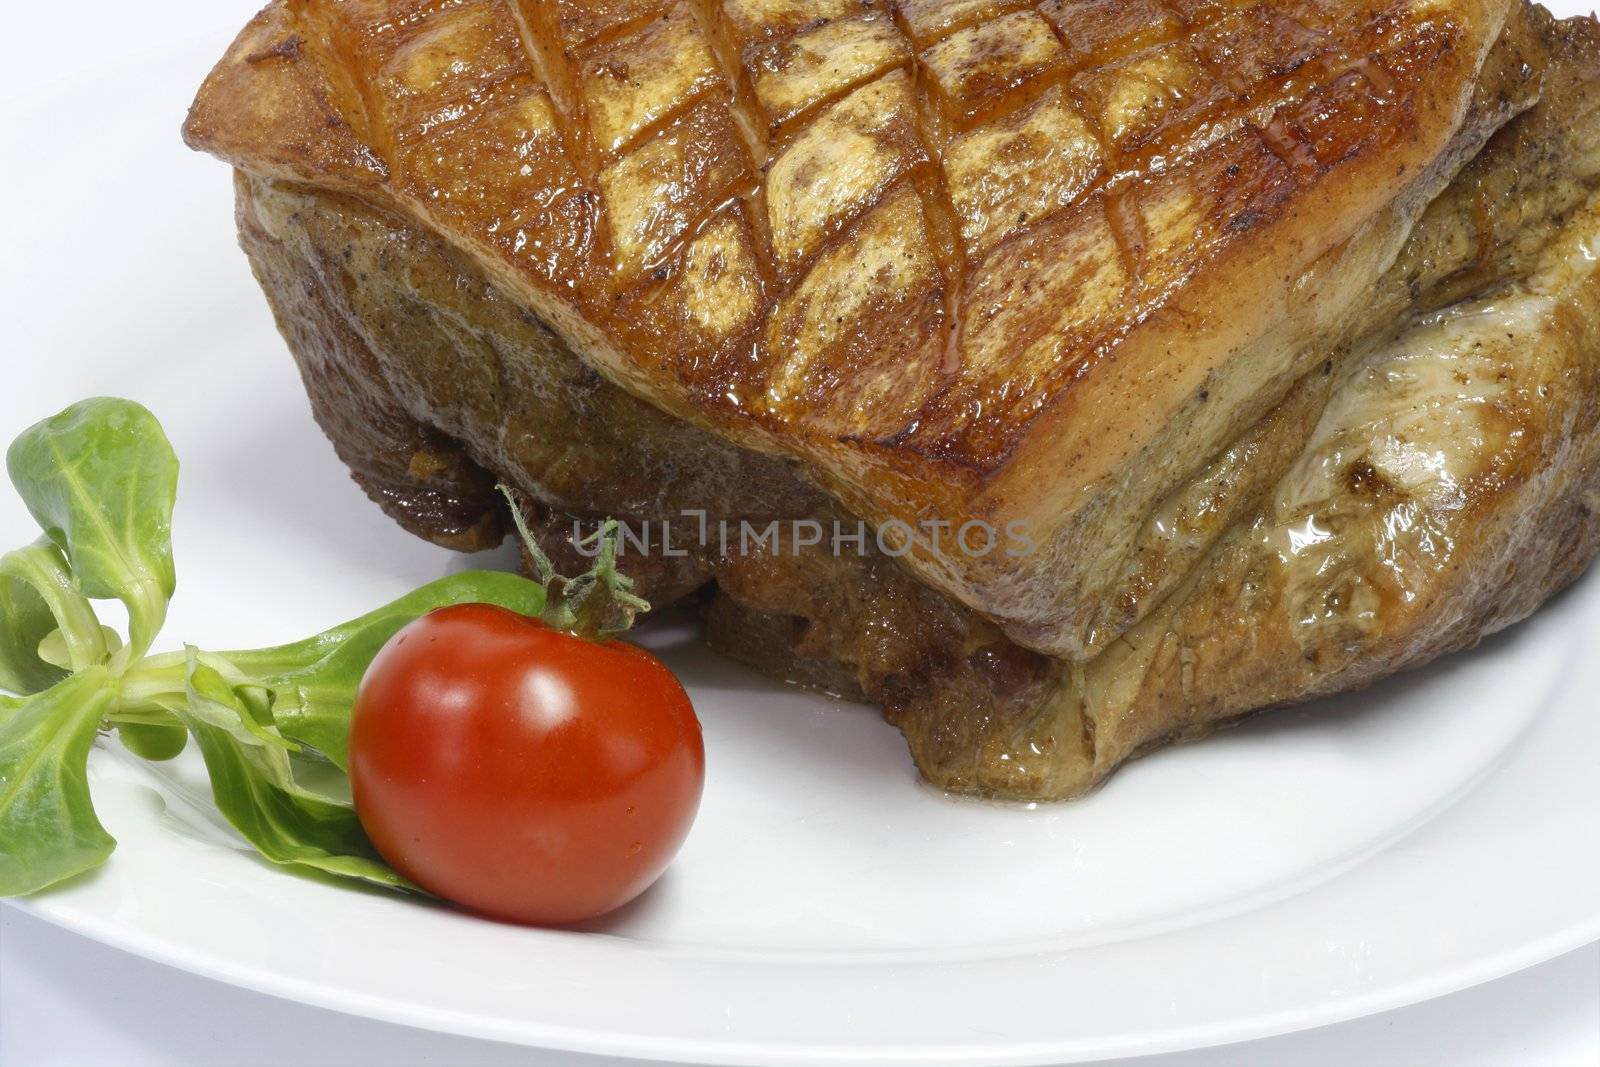 Crunchy pork roast on a plate over white background